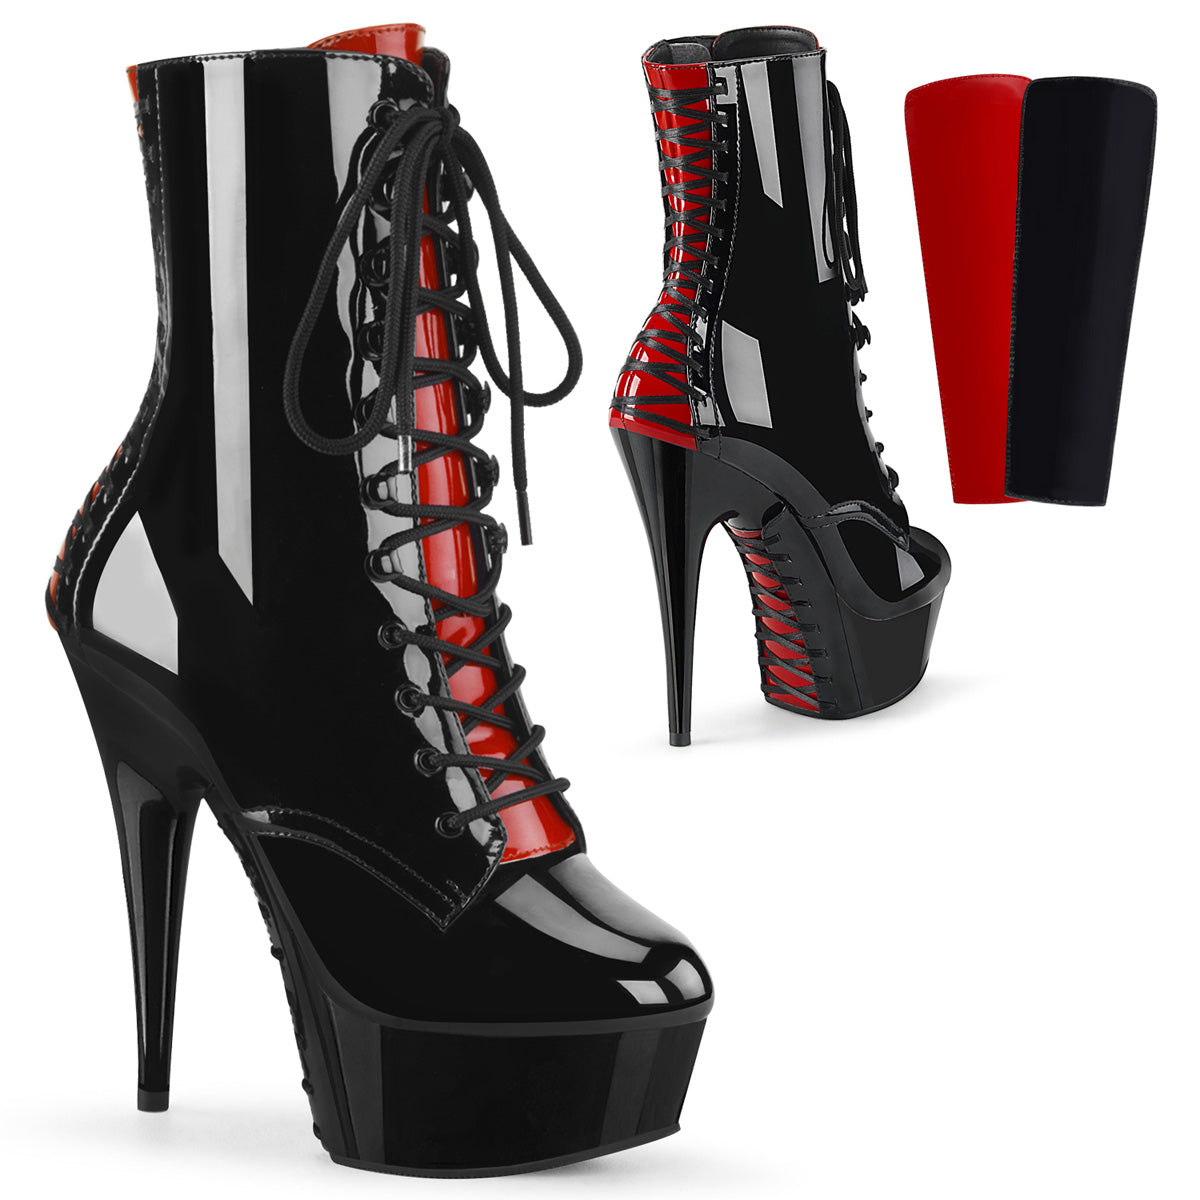 DELIGHT-1020FH 6" Heel Black Patent Pole Dancing Platforms-Pleaser- Sexy Shoes